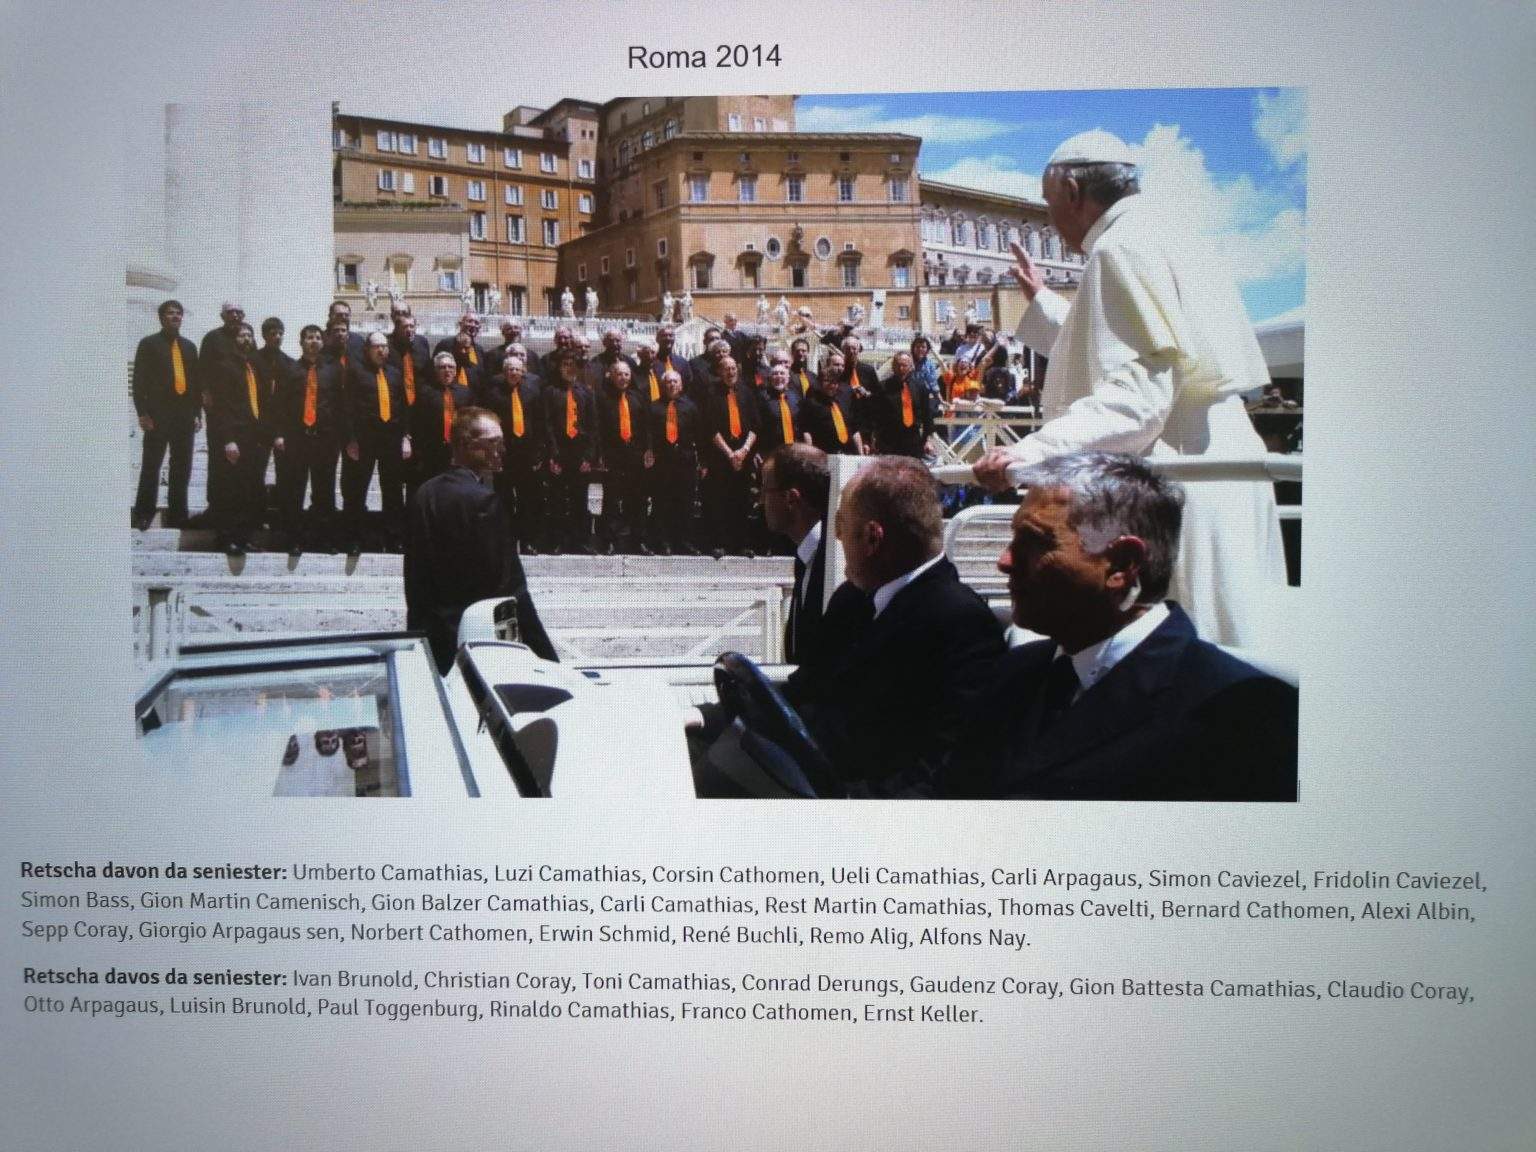 Viadi a Roma 17-21 da zercladur 2014